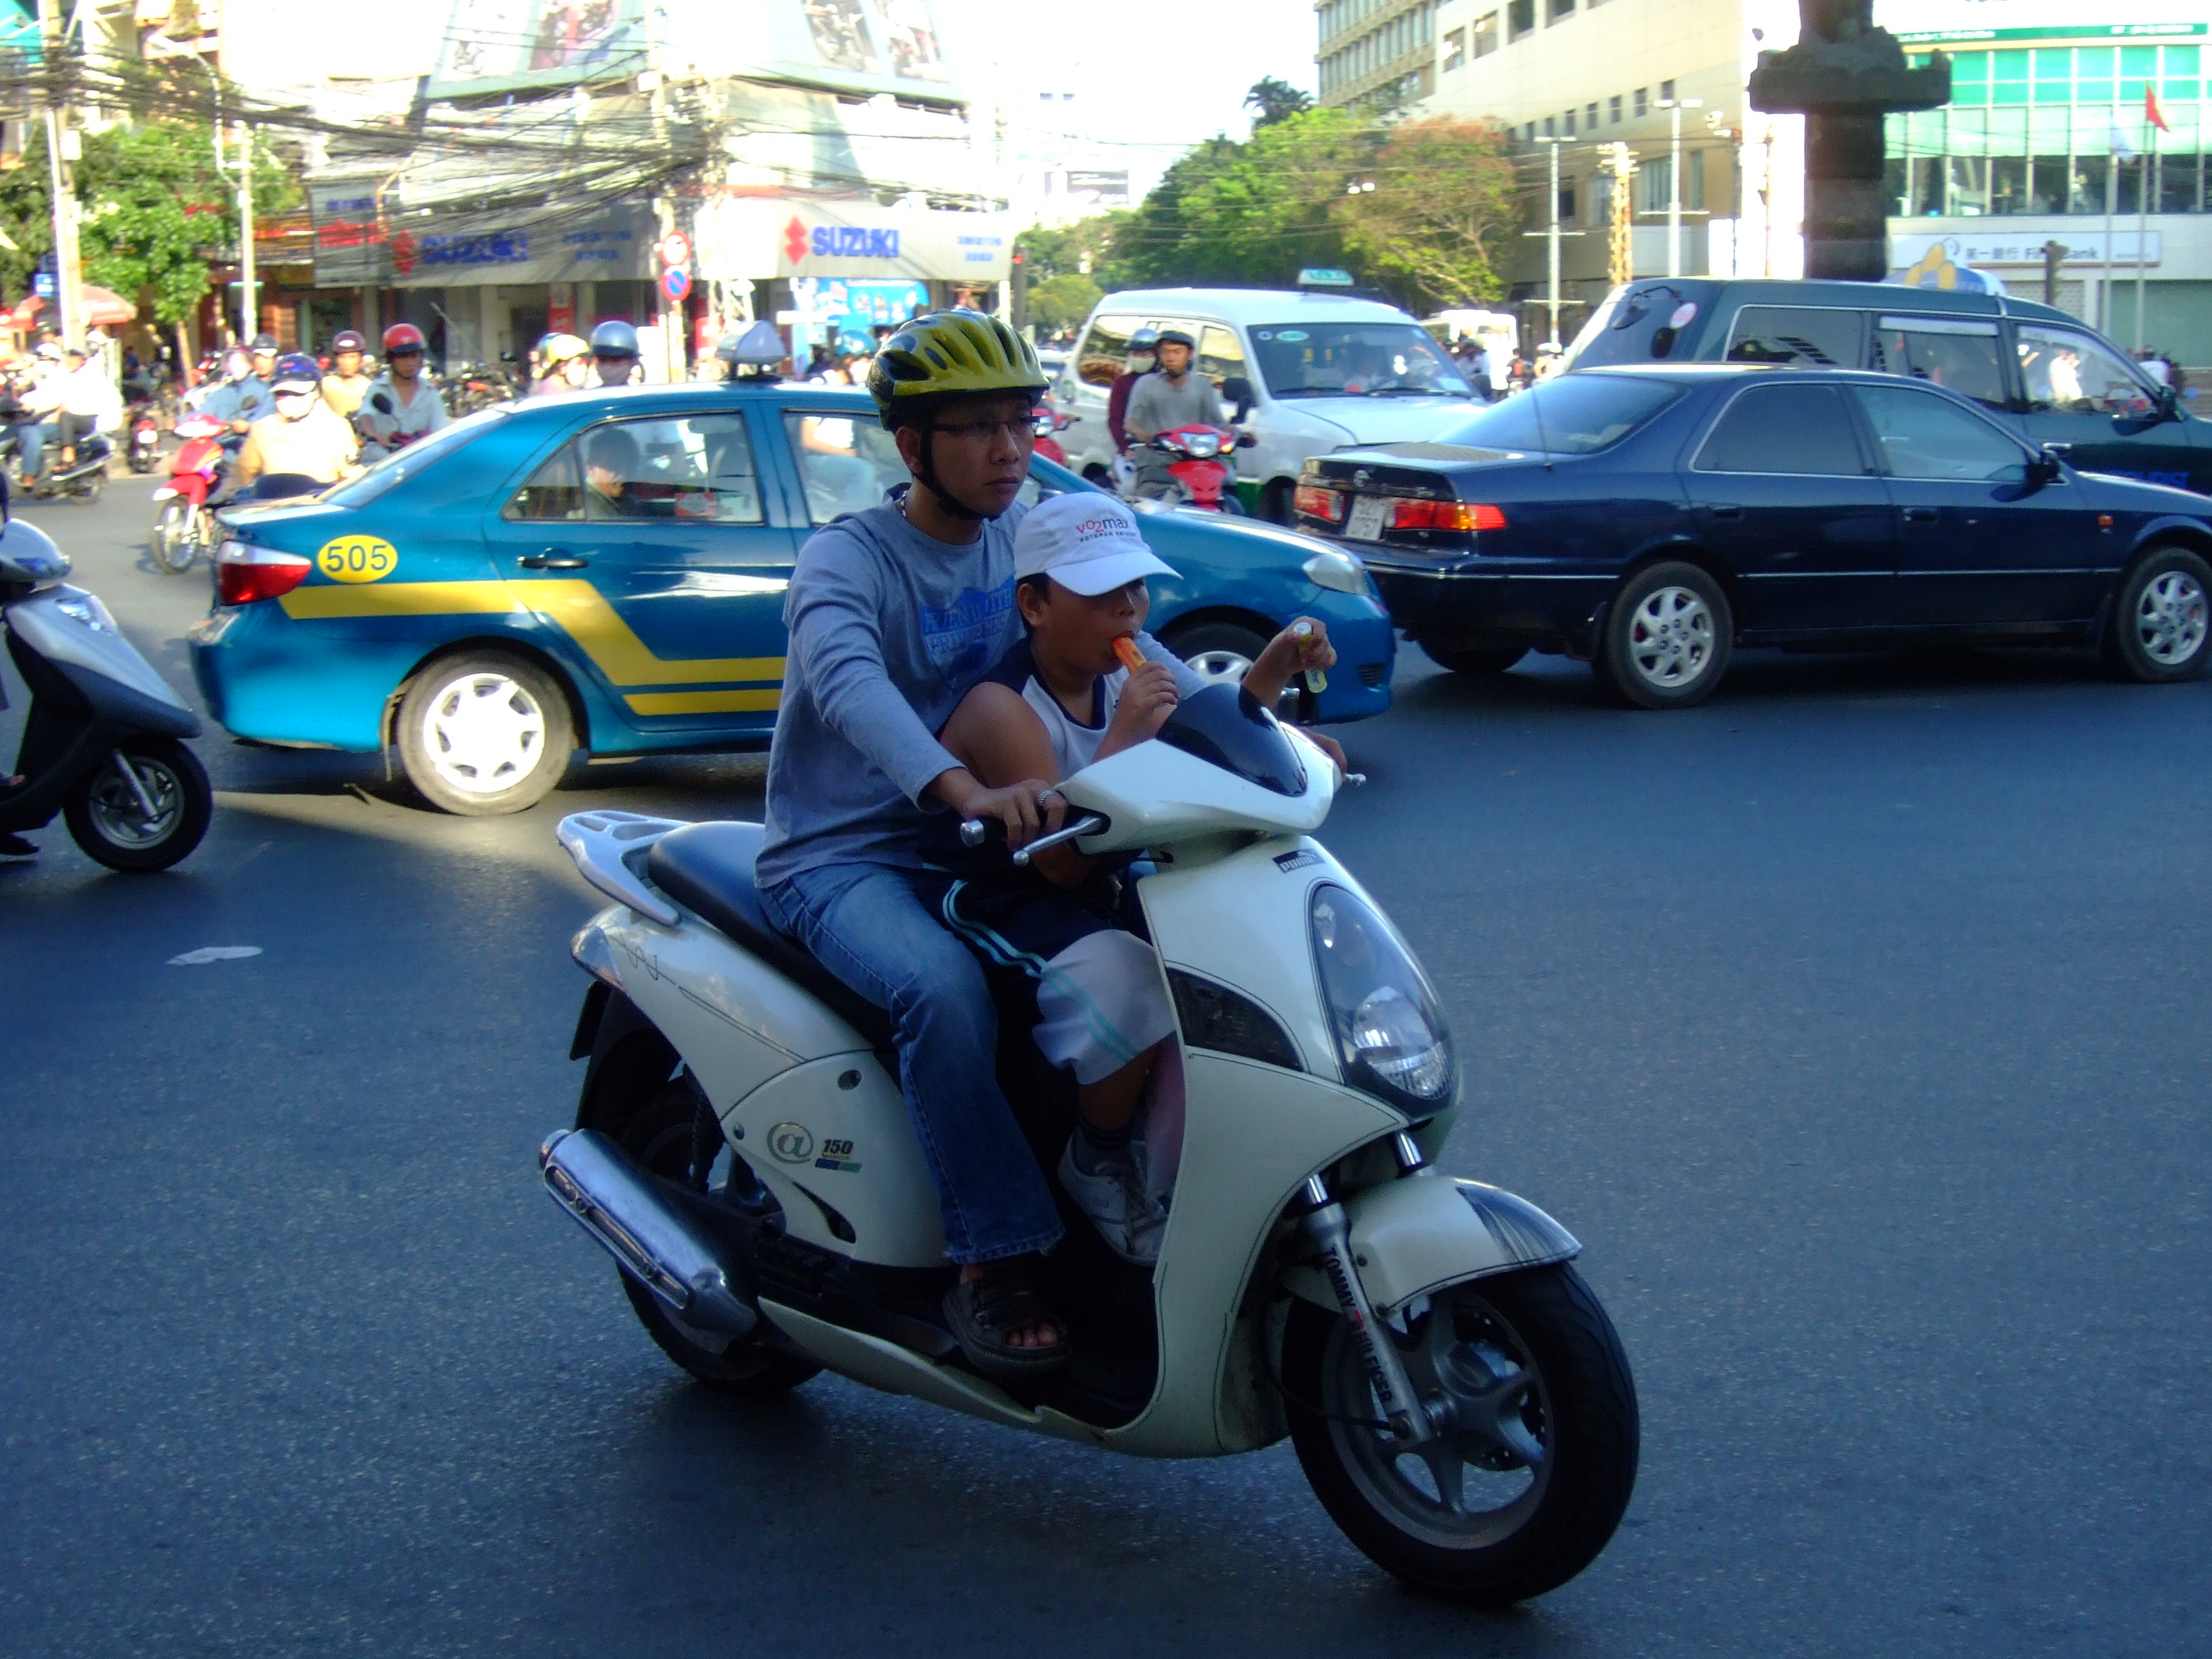 Vietnam Ho Chi Minh City scooters street scenes Feb 2009 21